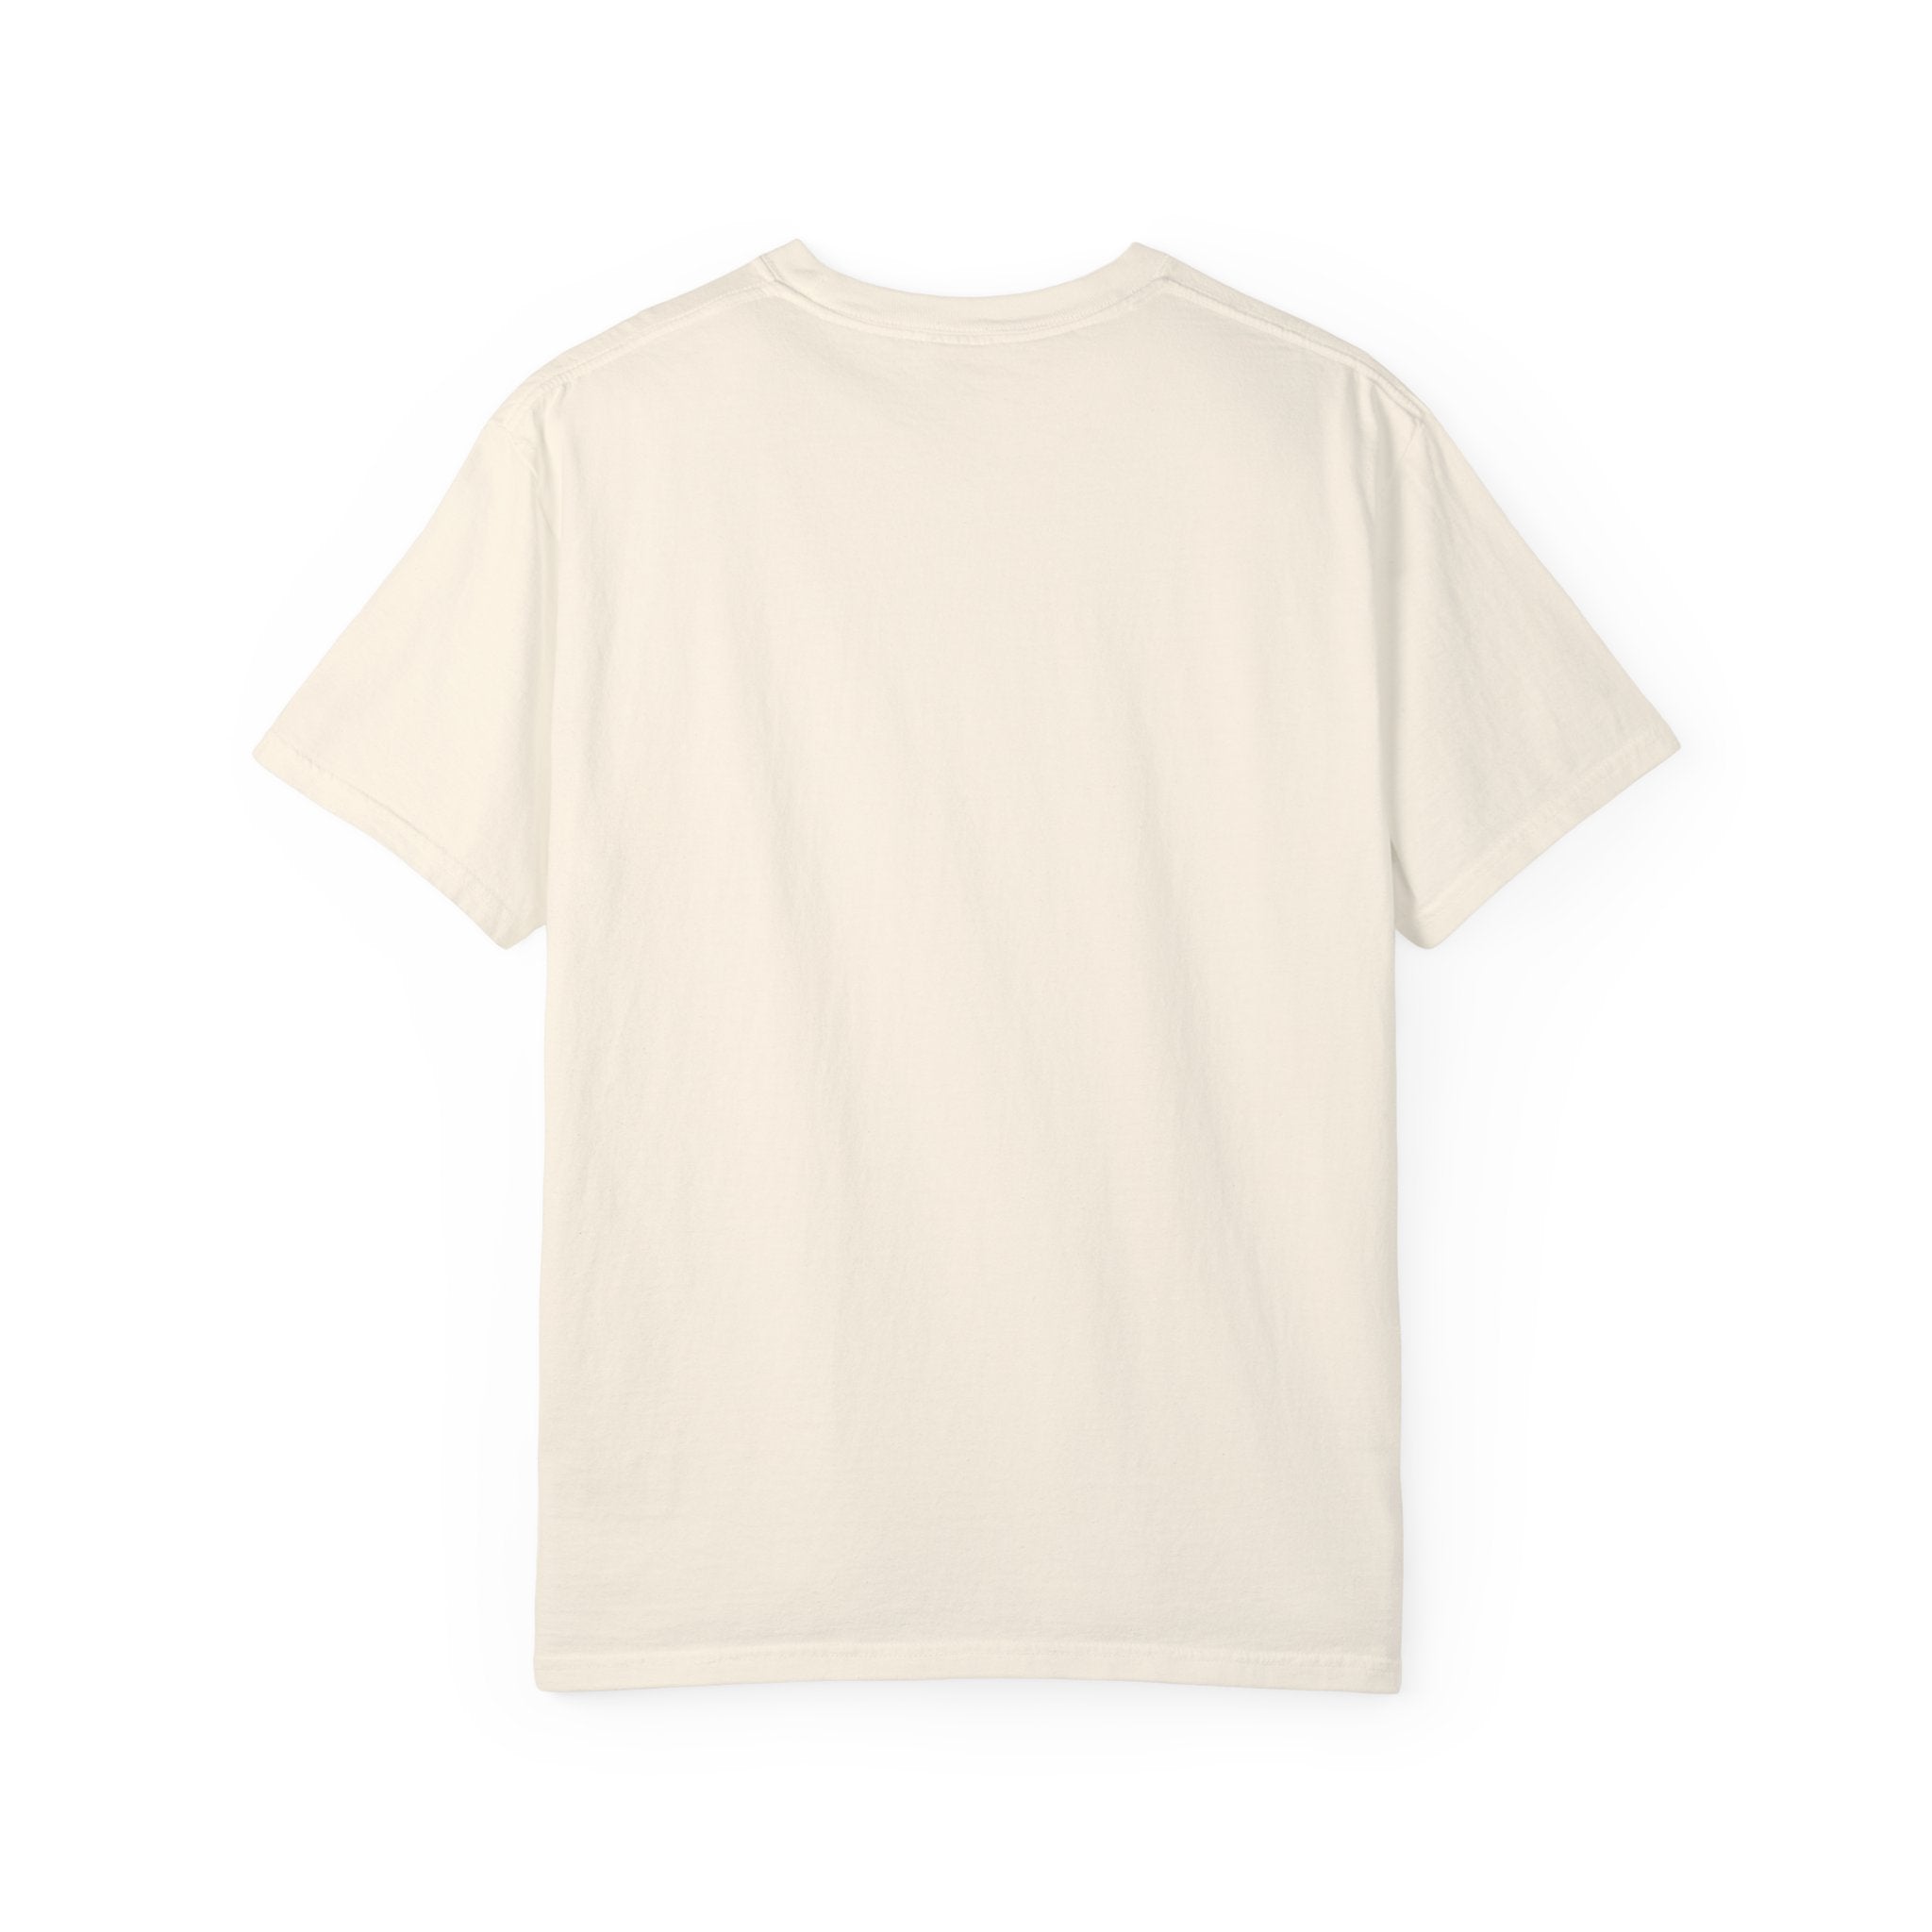 Fairlane  ZD - Unisex Garment-Dyed T-shirt